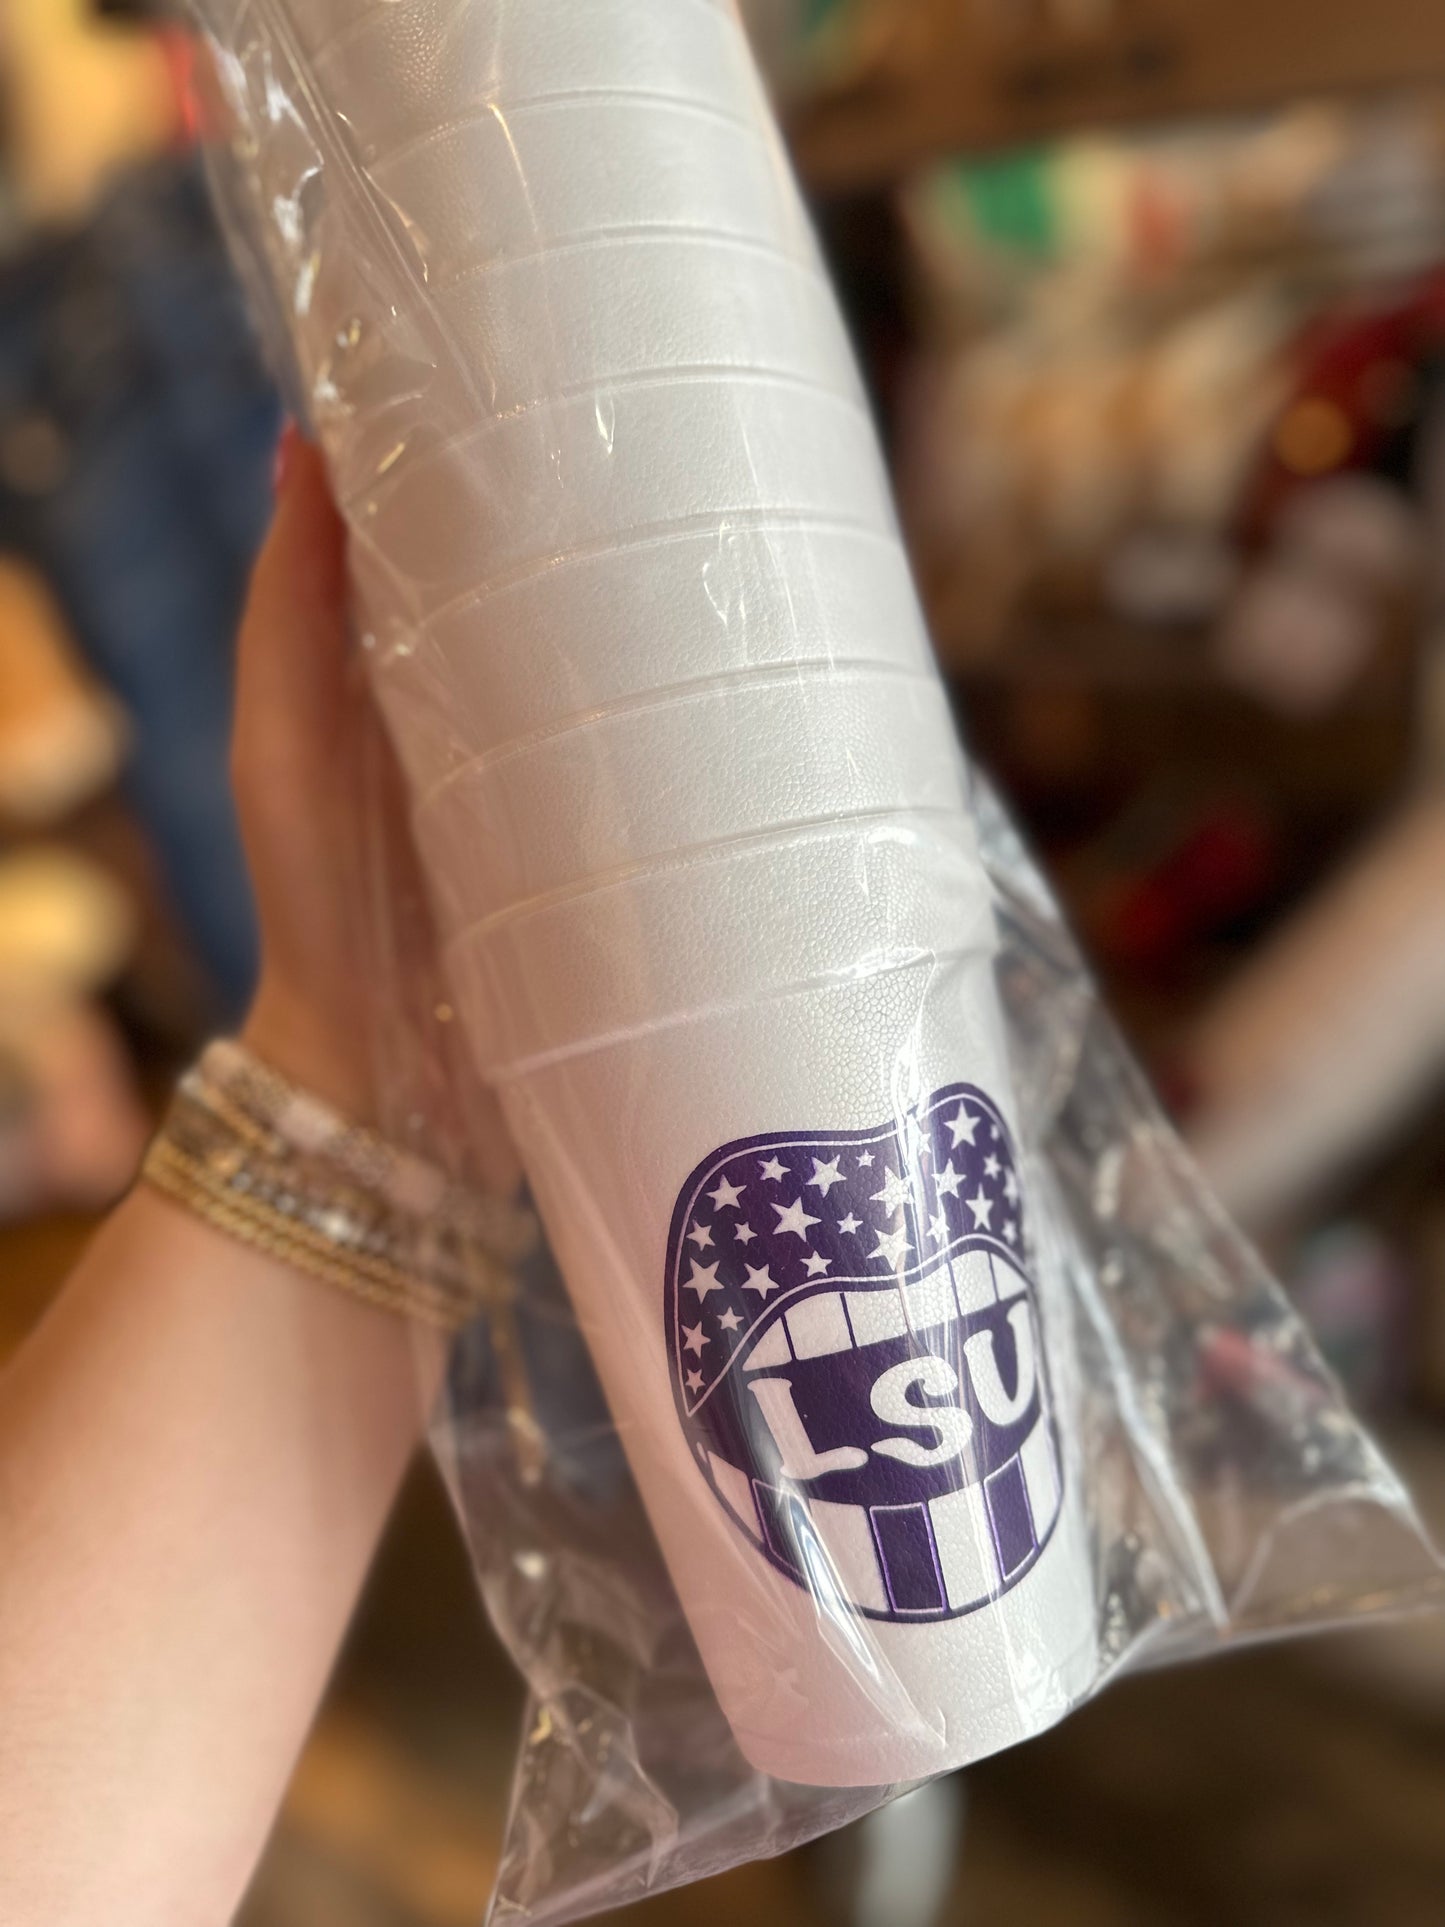 LSU styrofoam cups